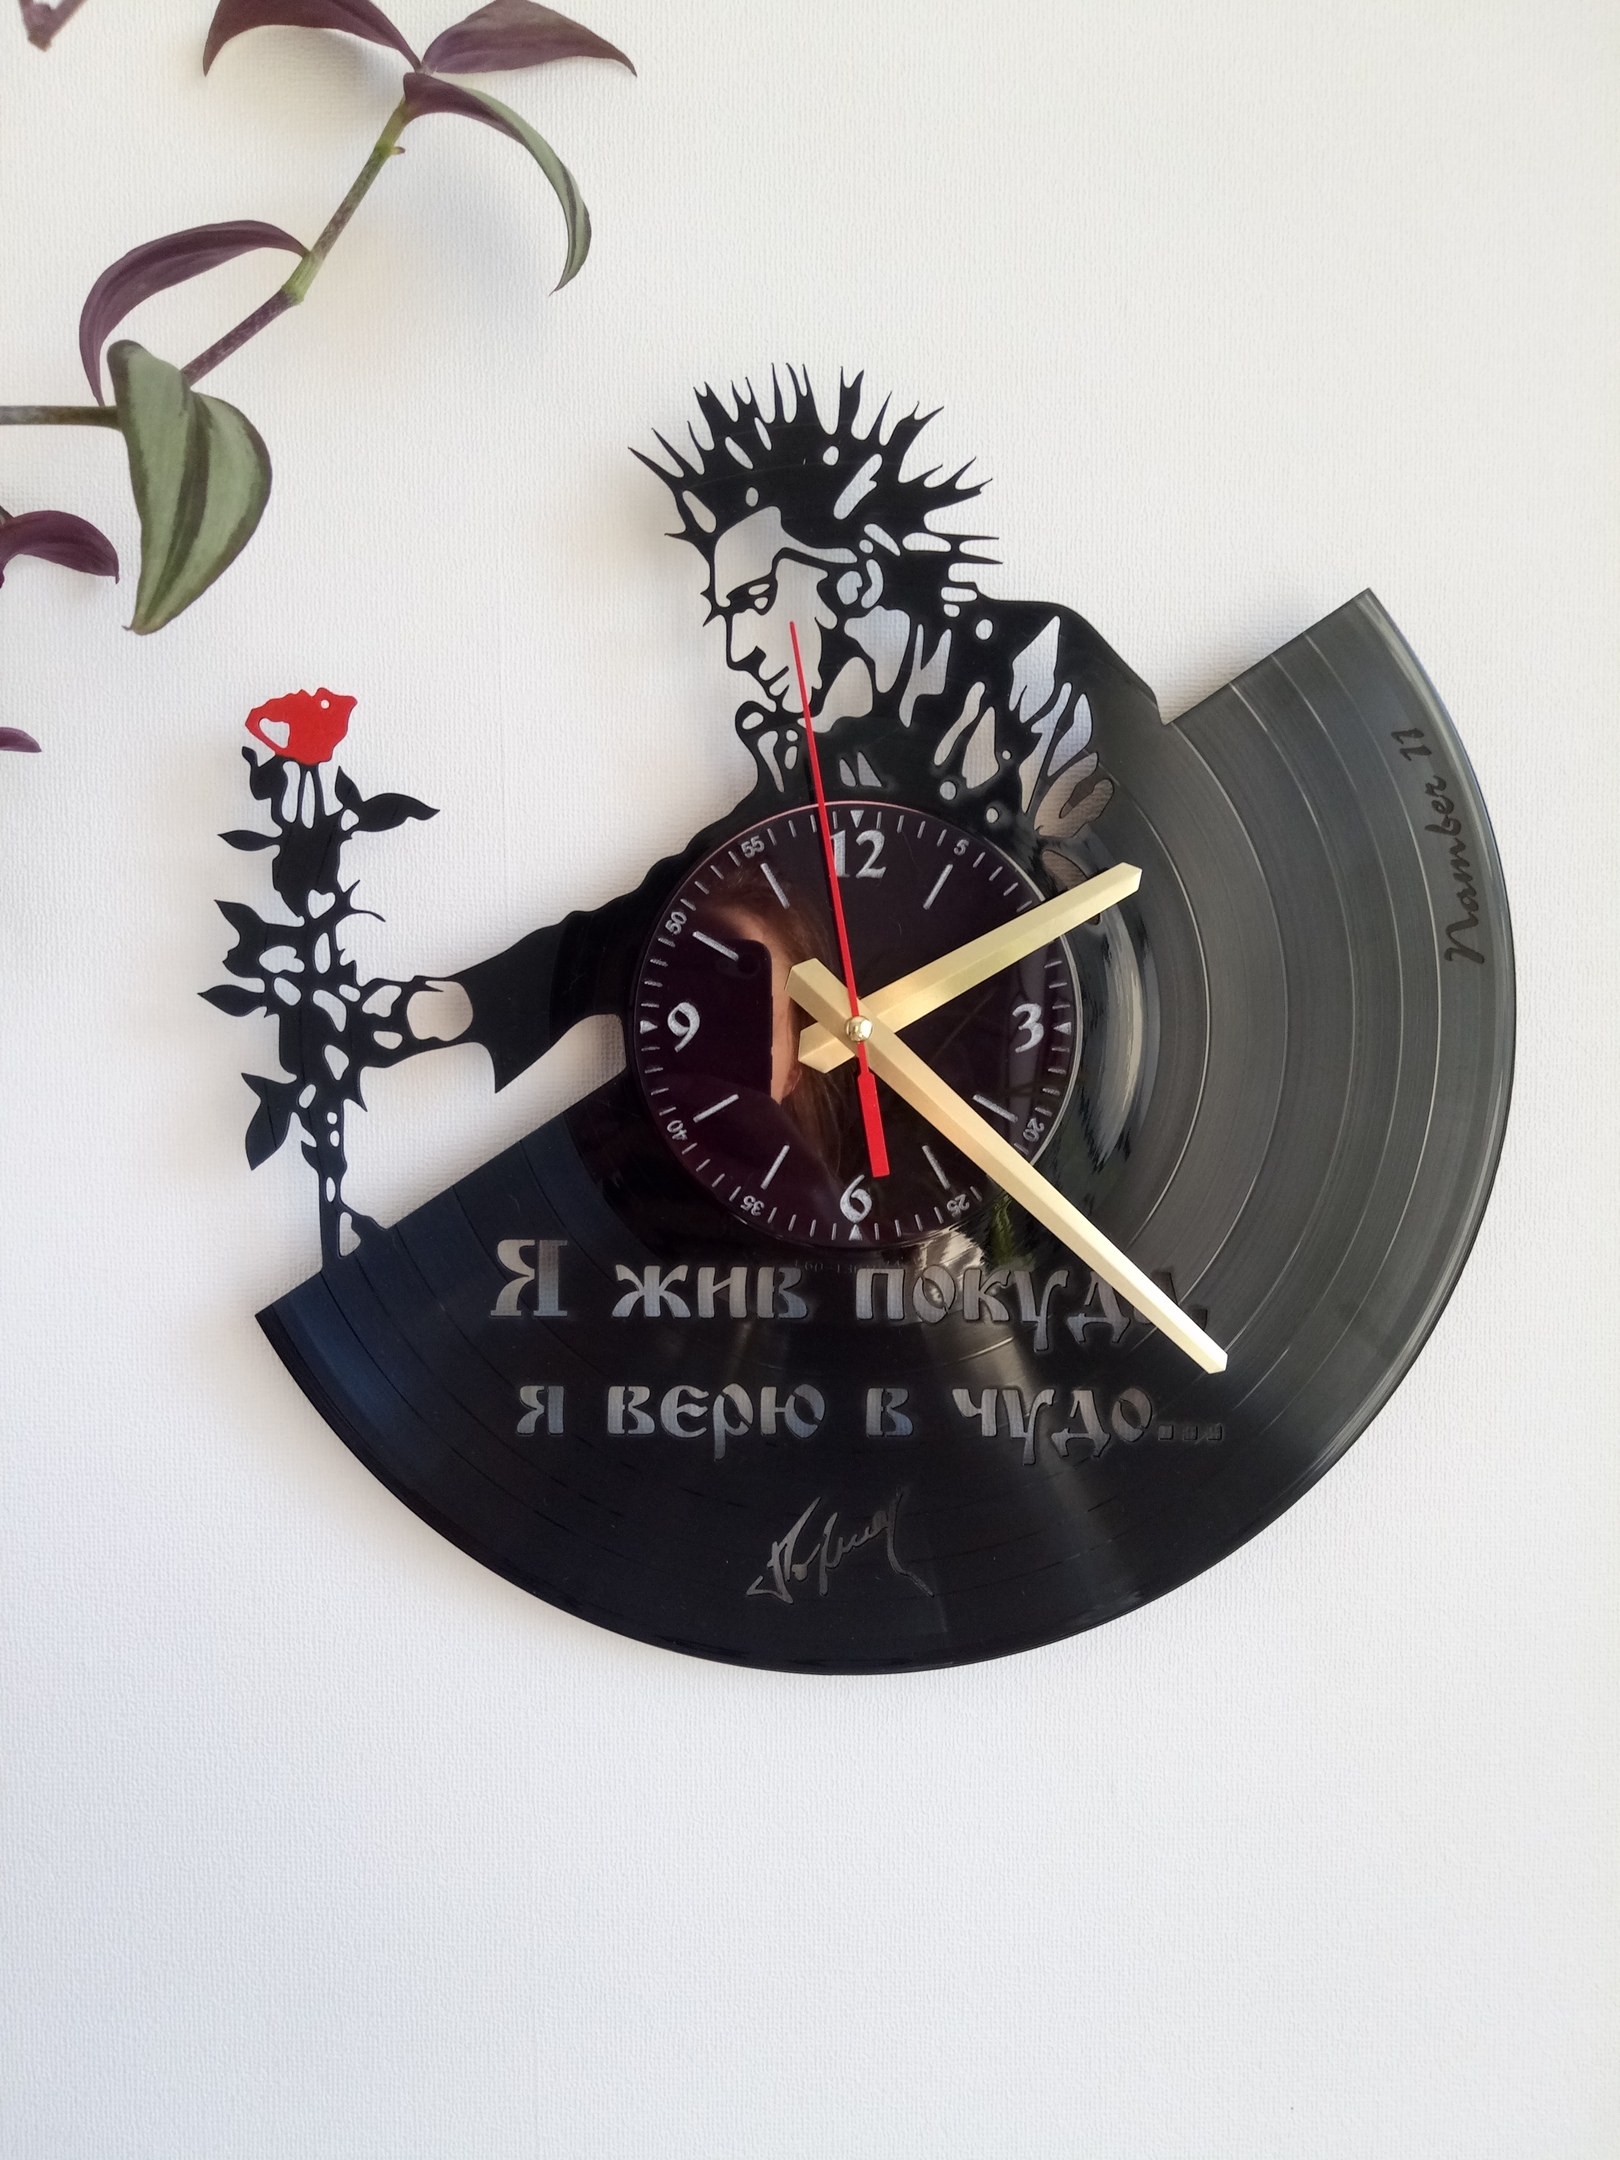 Download Laser Cut Korol I Shut Russian Horror Punk Band Vinyl Record Wall Clock Free Vector - Designs ...